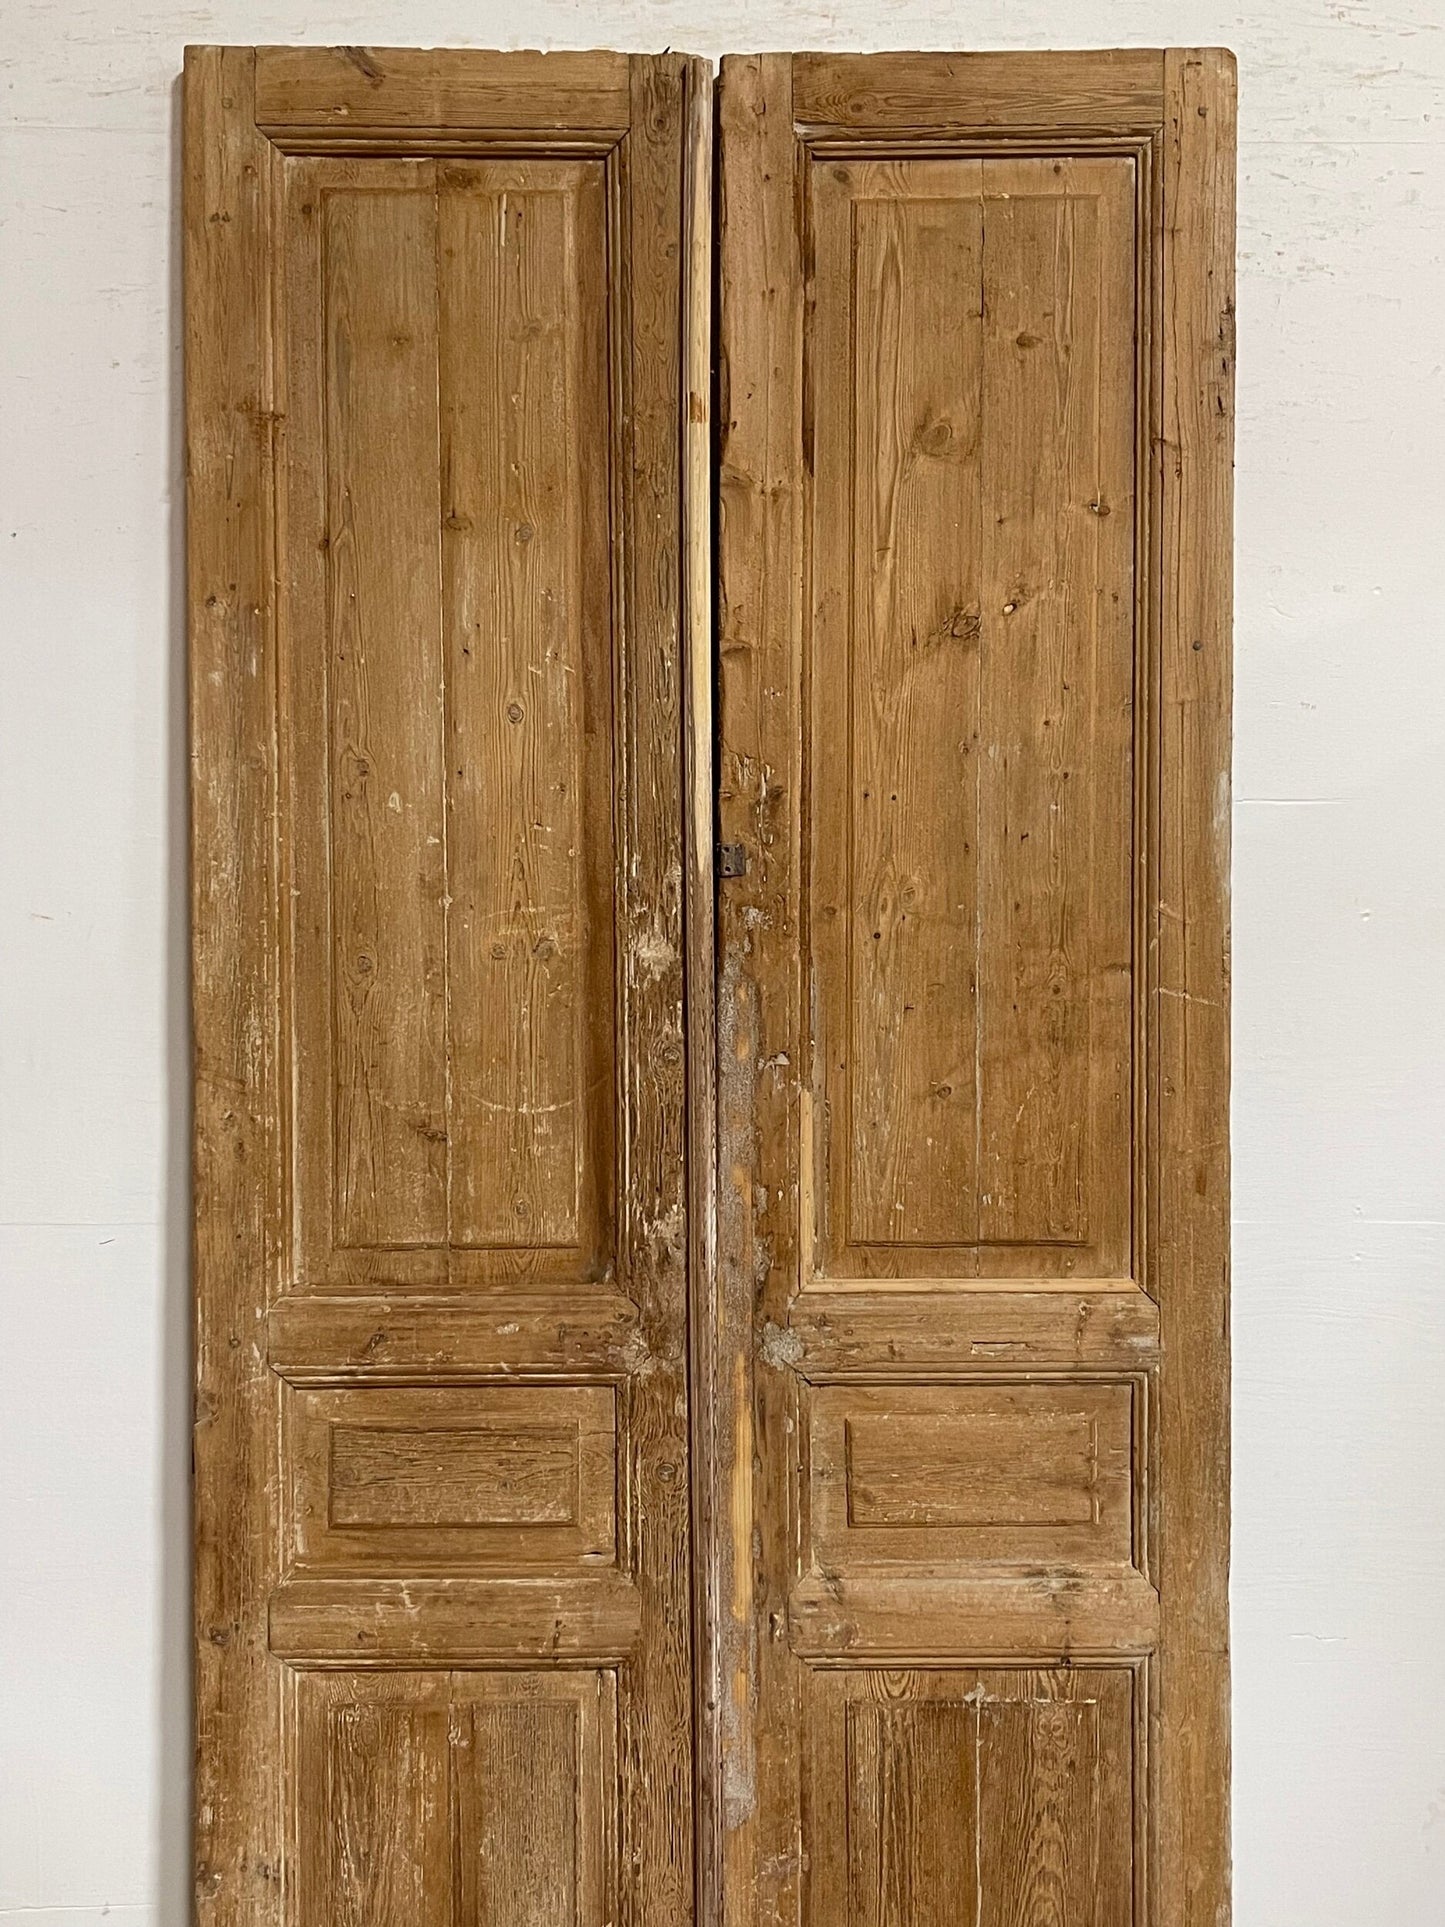 Antique French panel doors (99 x 44.5) I077